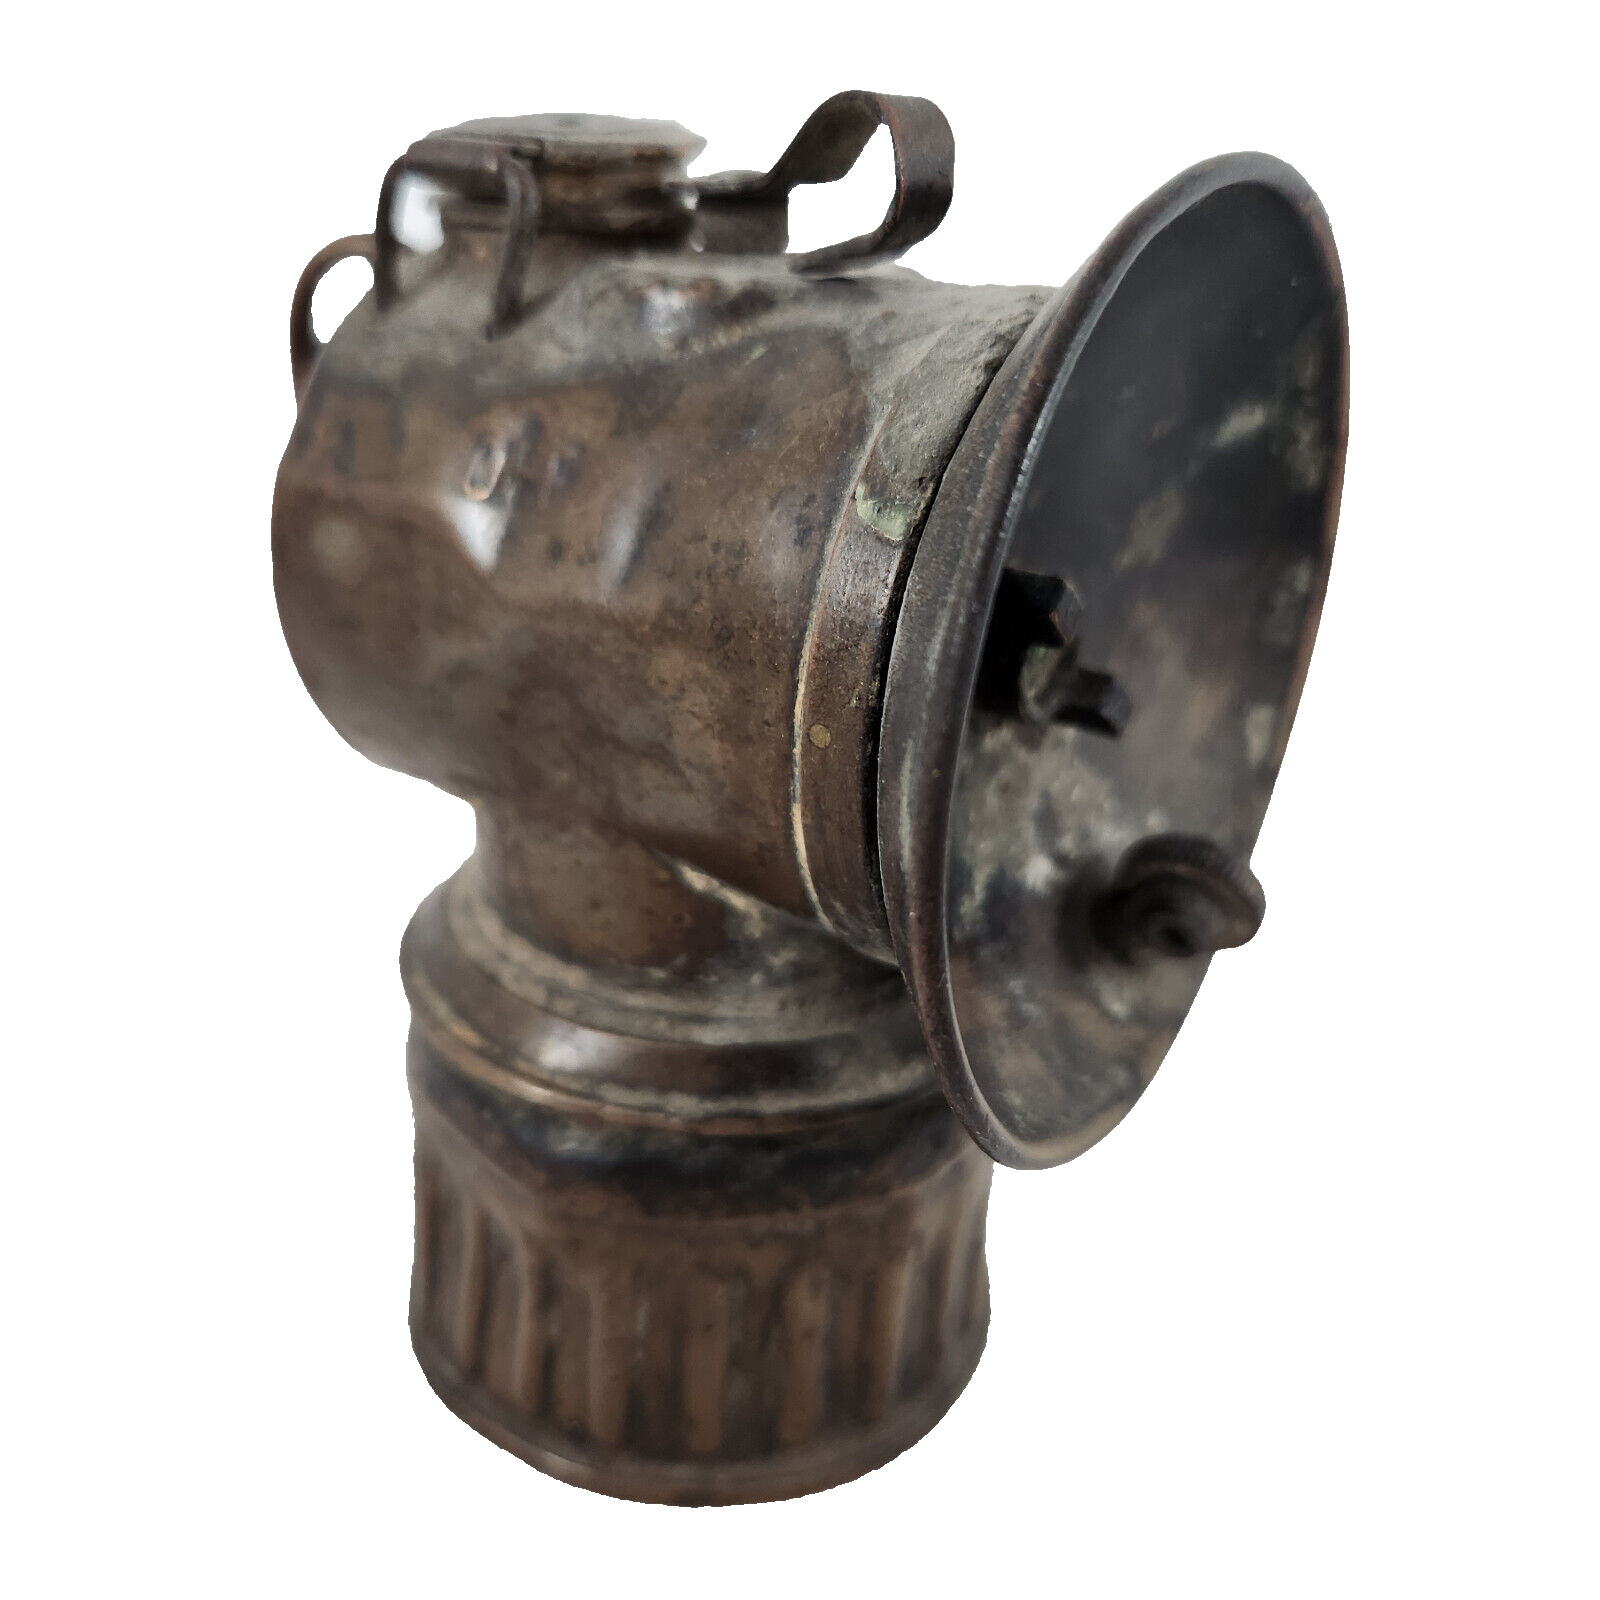 Vintage 1920s Justrite Carbide Miners Mining Lantern Lamp - Brass/Copper Color